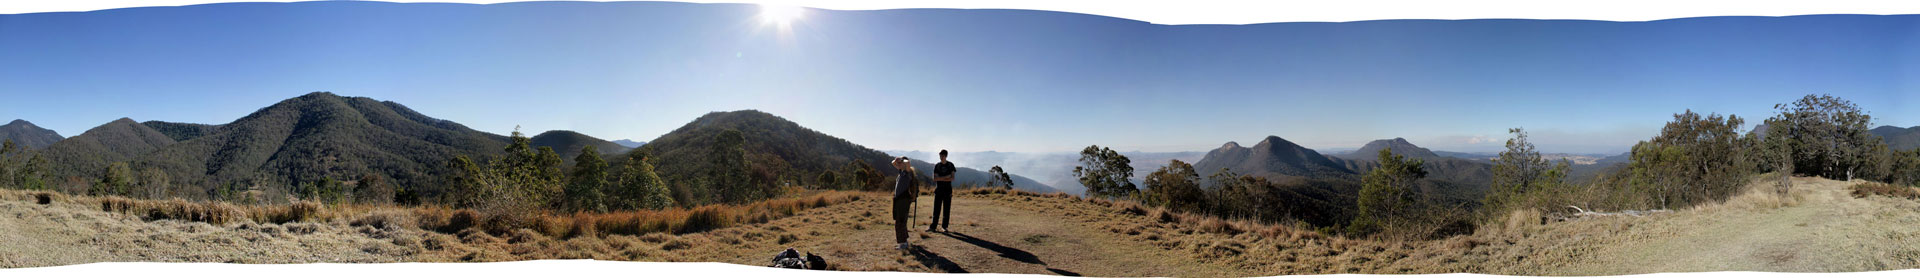 Bronwen & Clint surveying the range, Upper Portals, Mt Barney